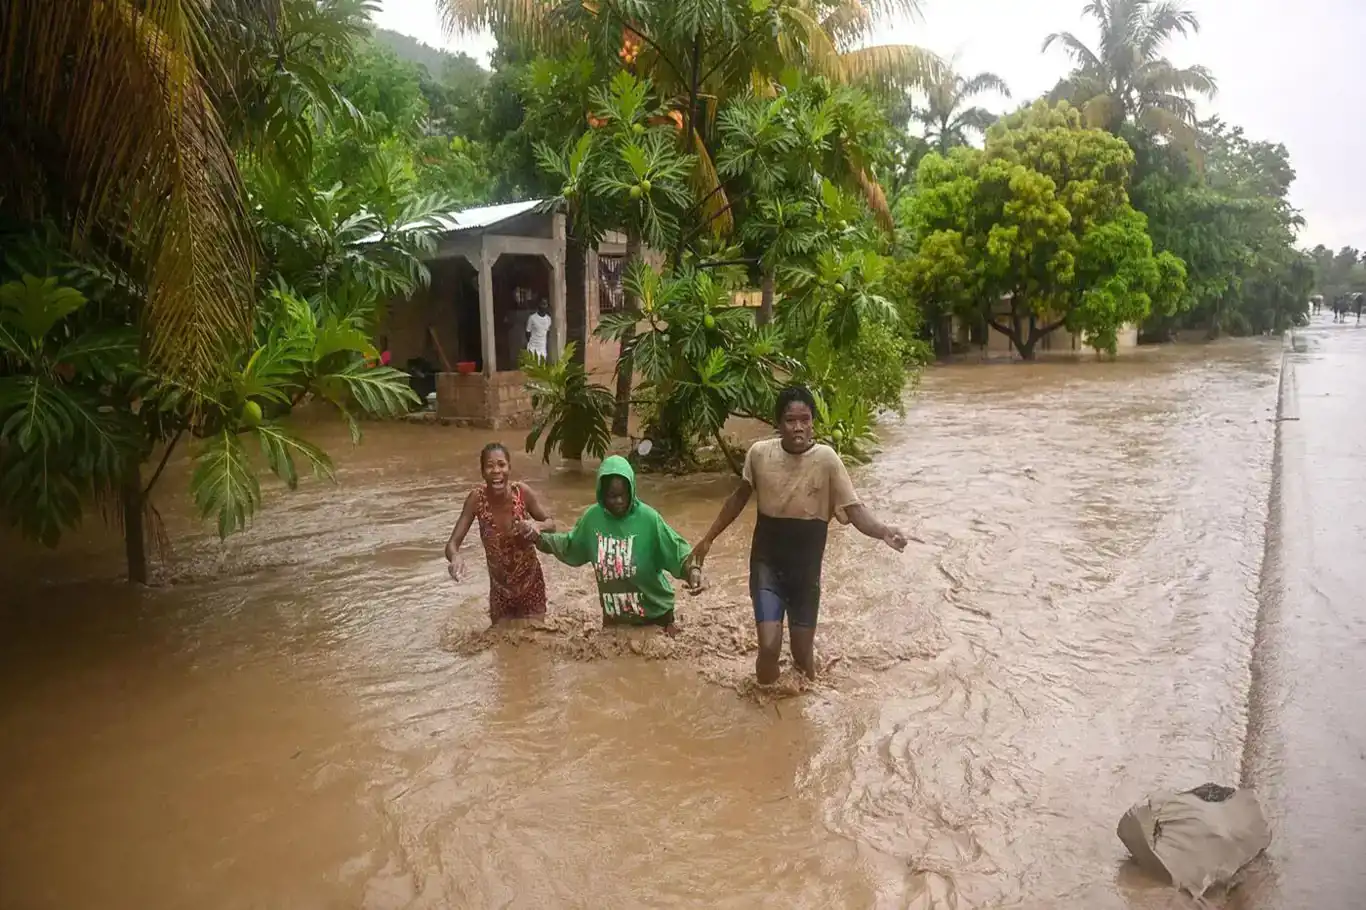 Heavy rains in Haiti cause devastating floods, leaving dozens dead and displaced